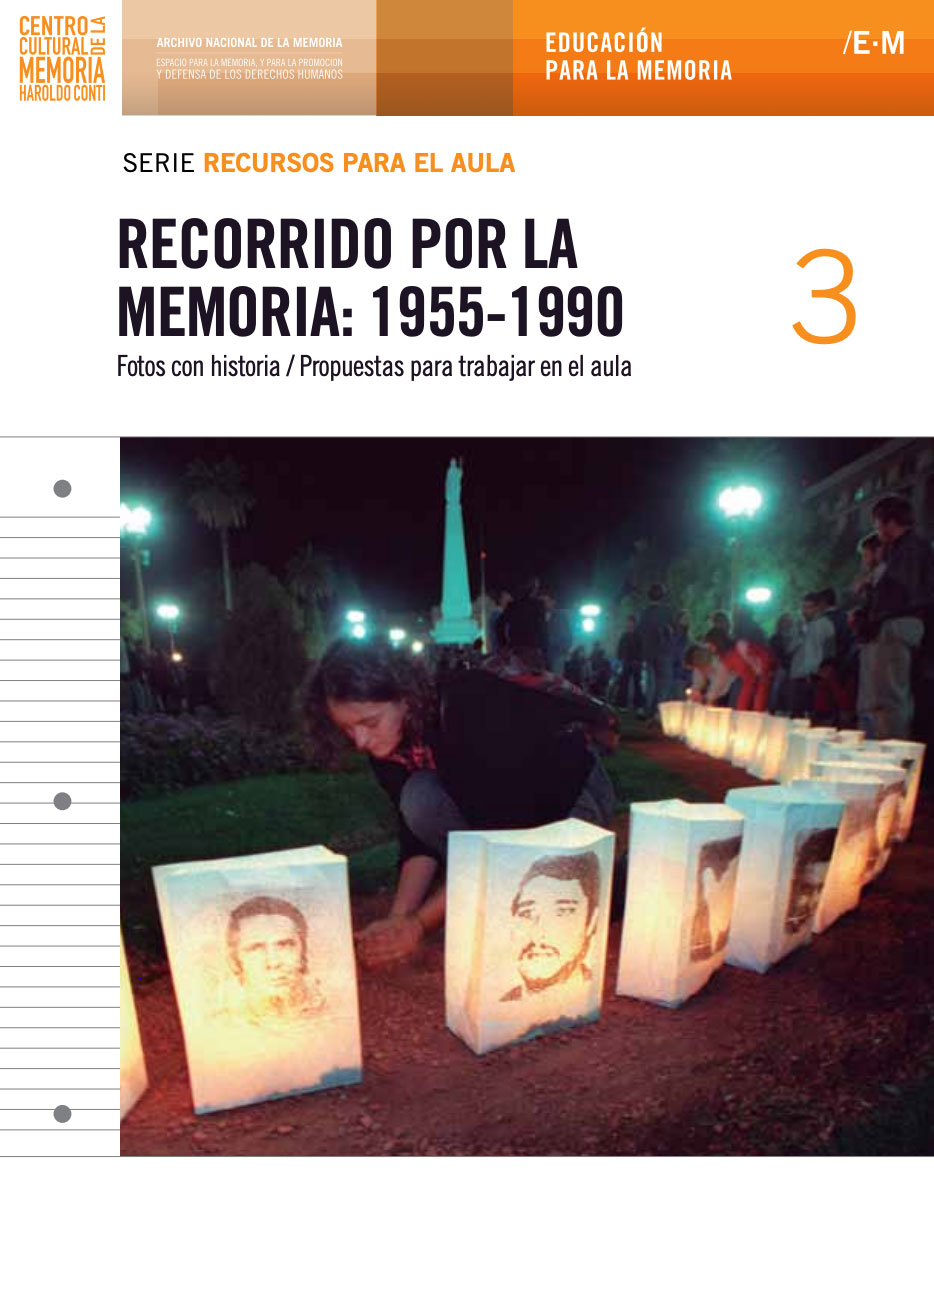 Recorrido por la Memoria: 1955-1990